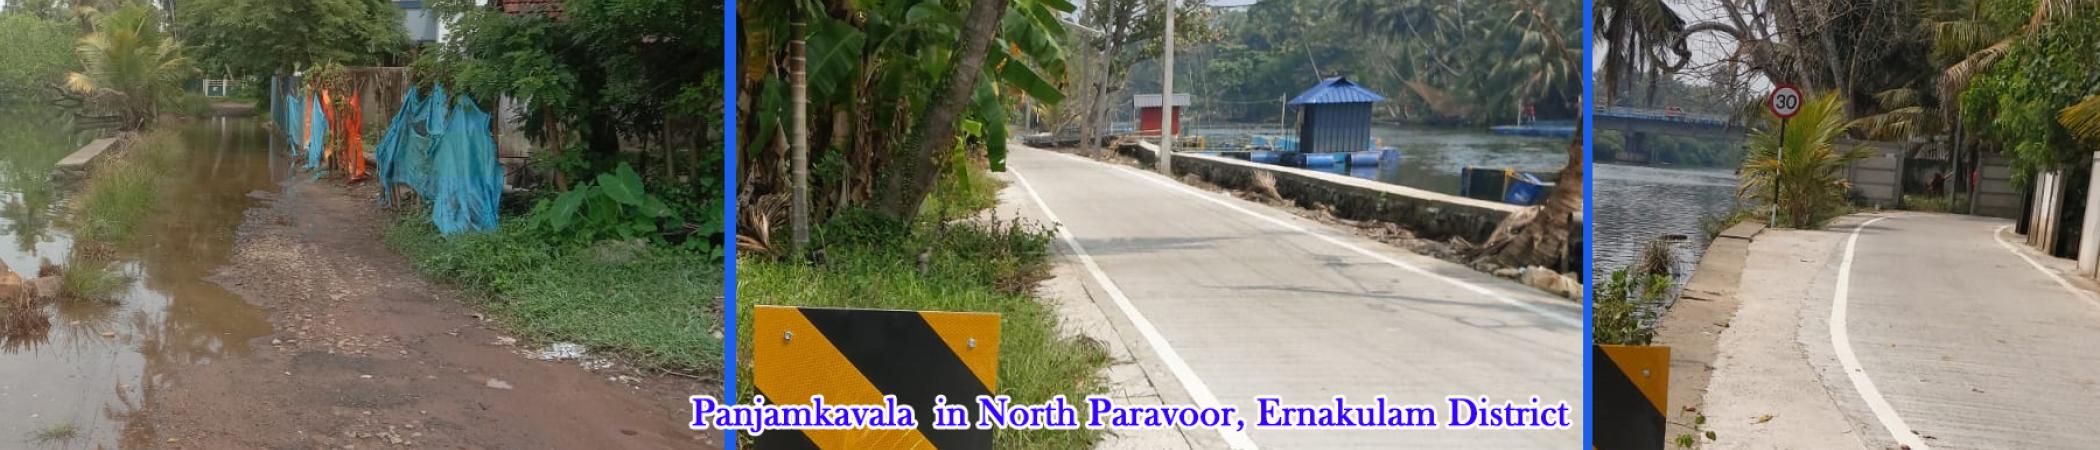 Panjamkavala road